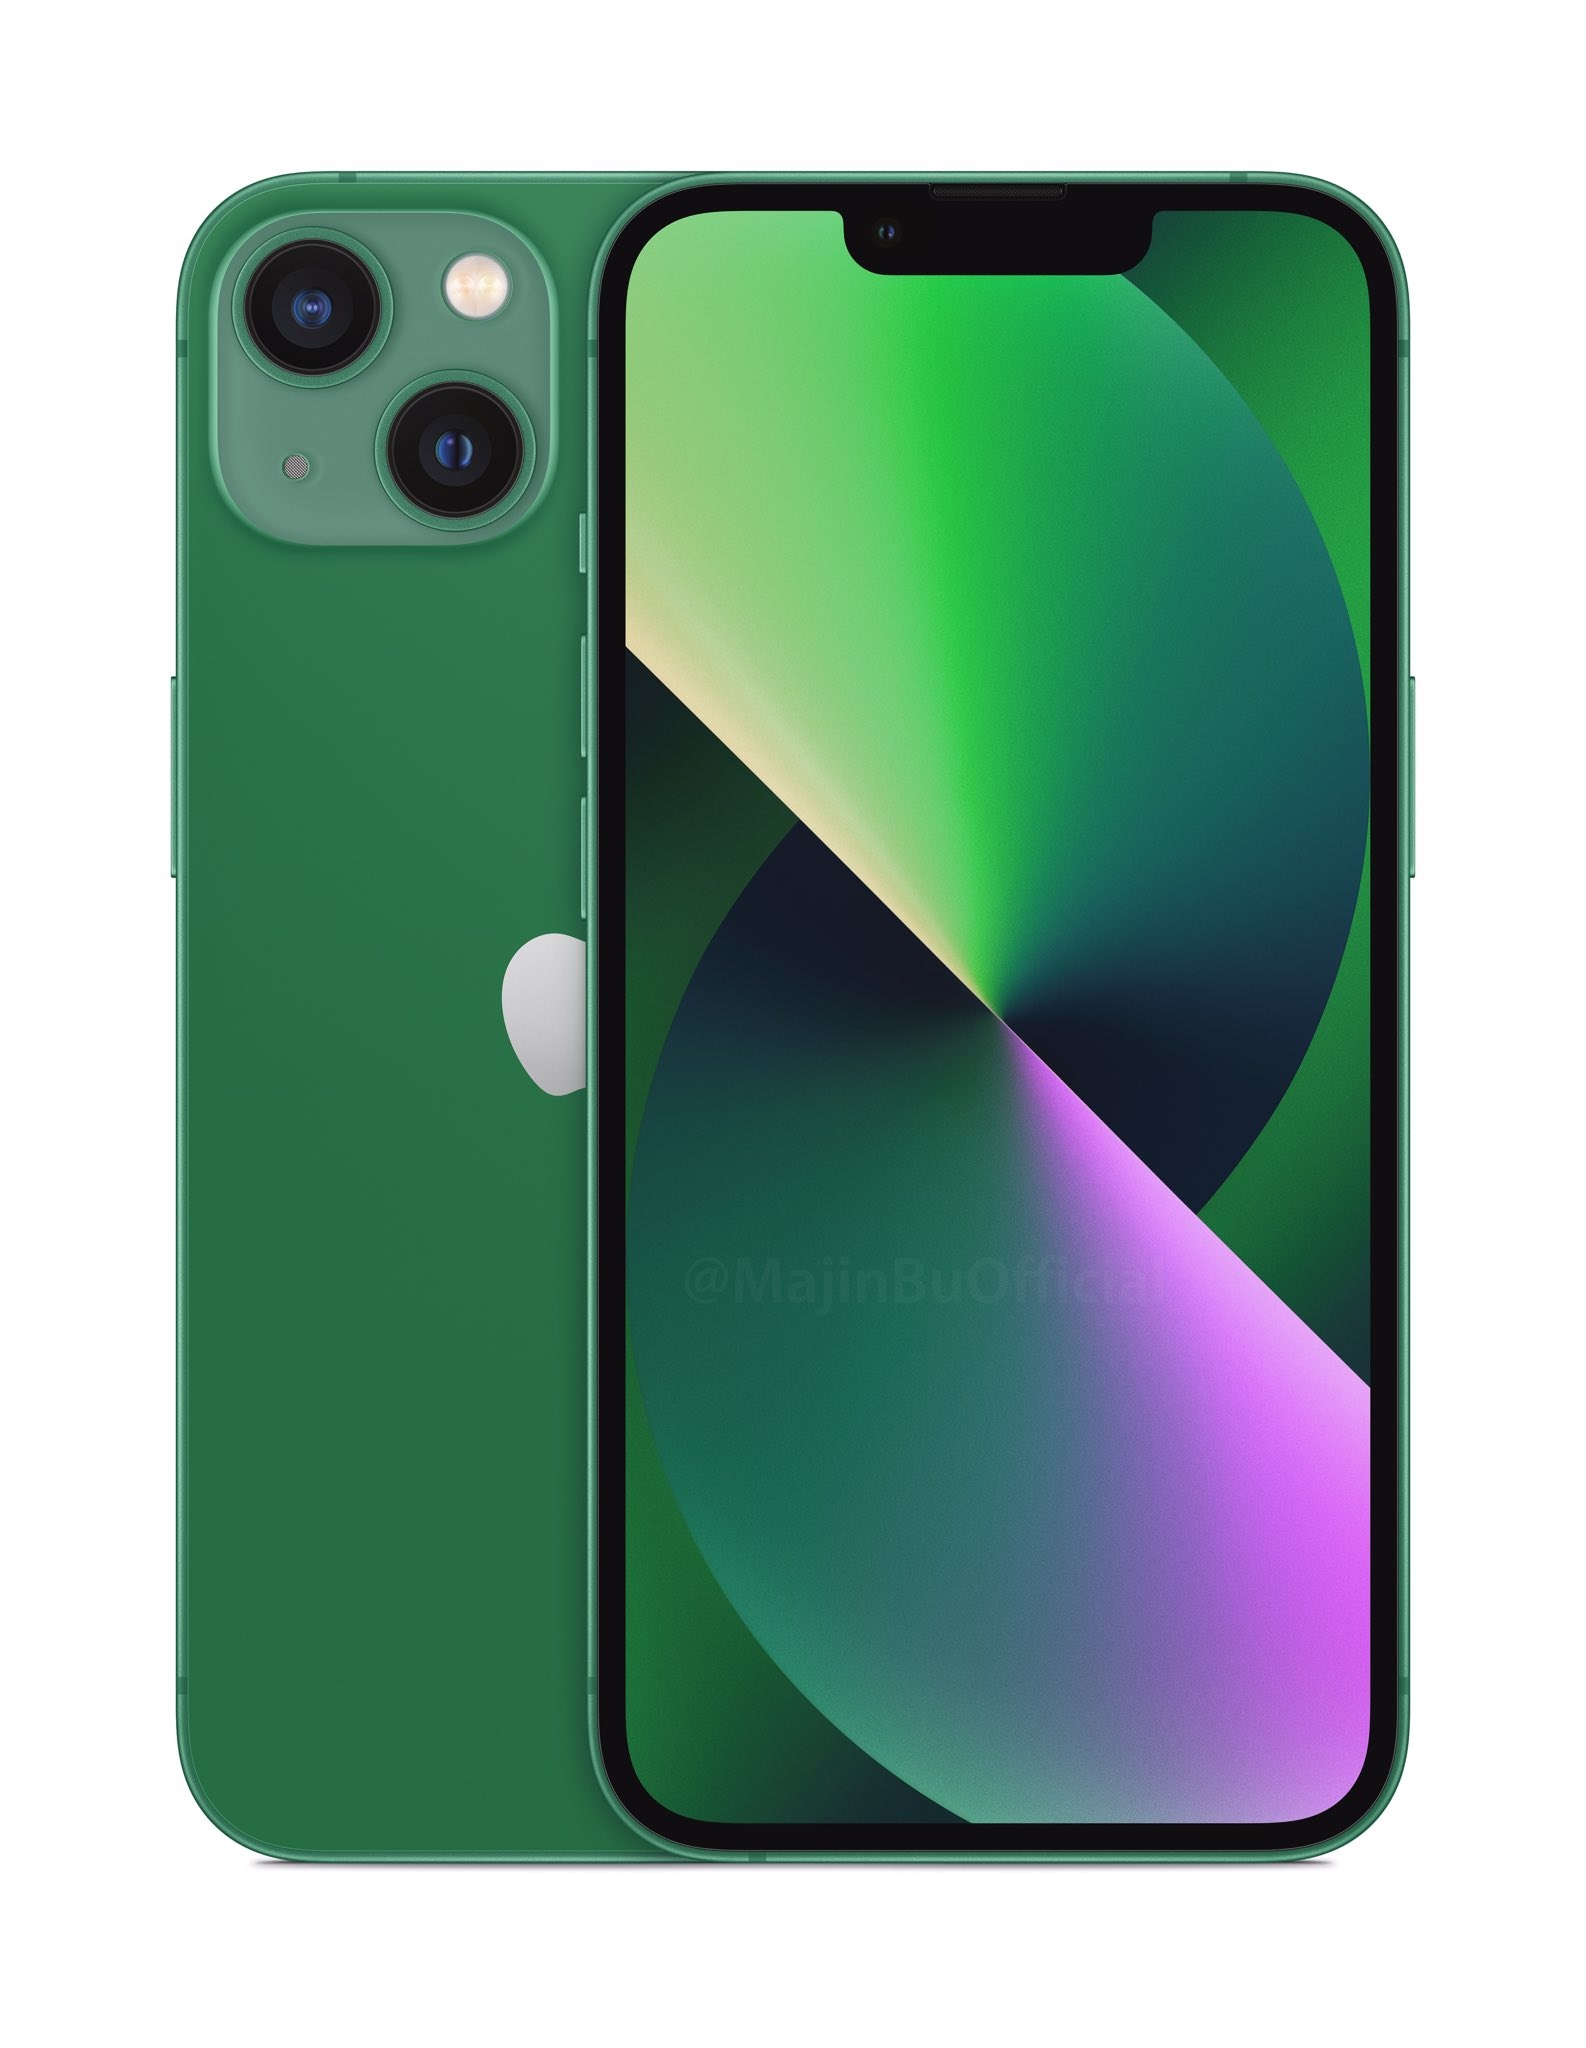 iPhone 13 xanh lá cây